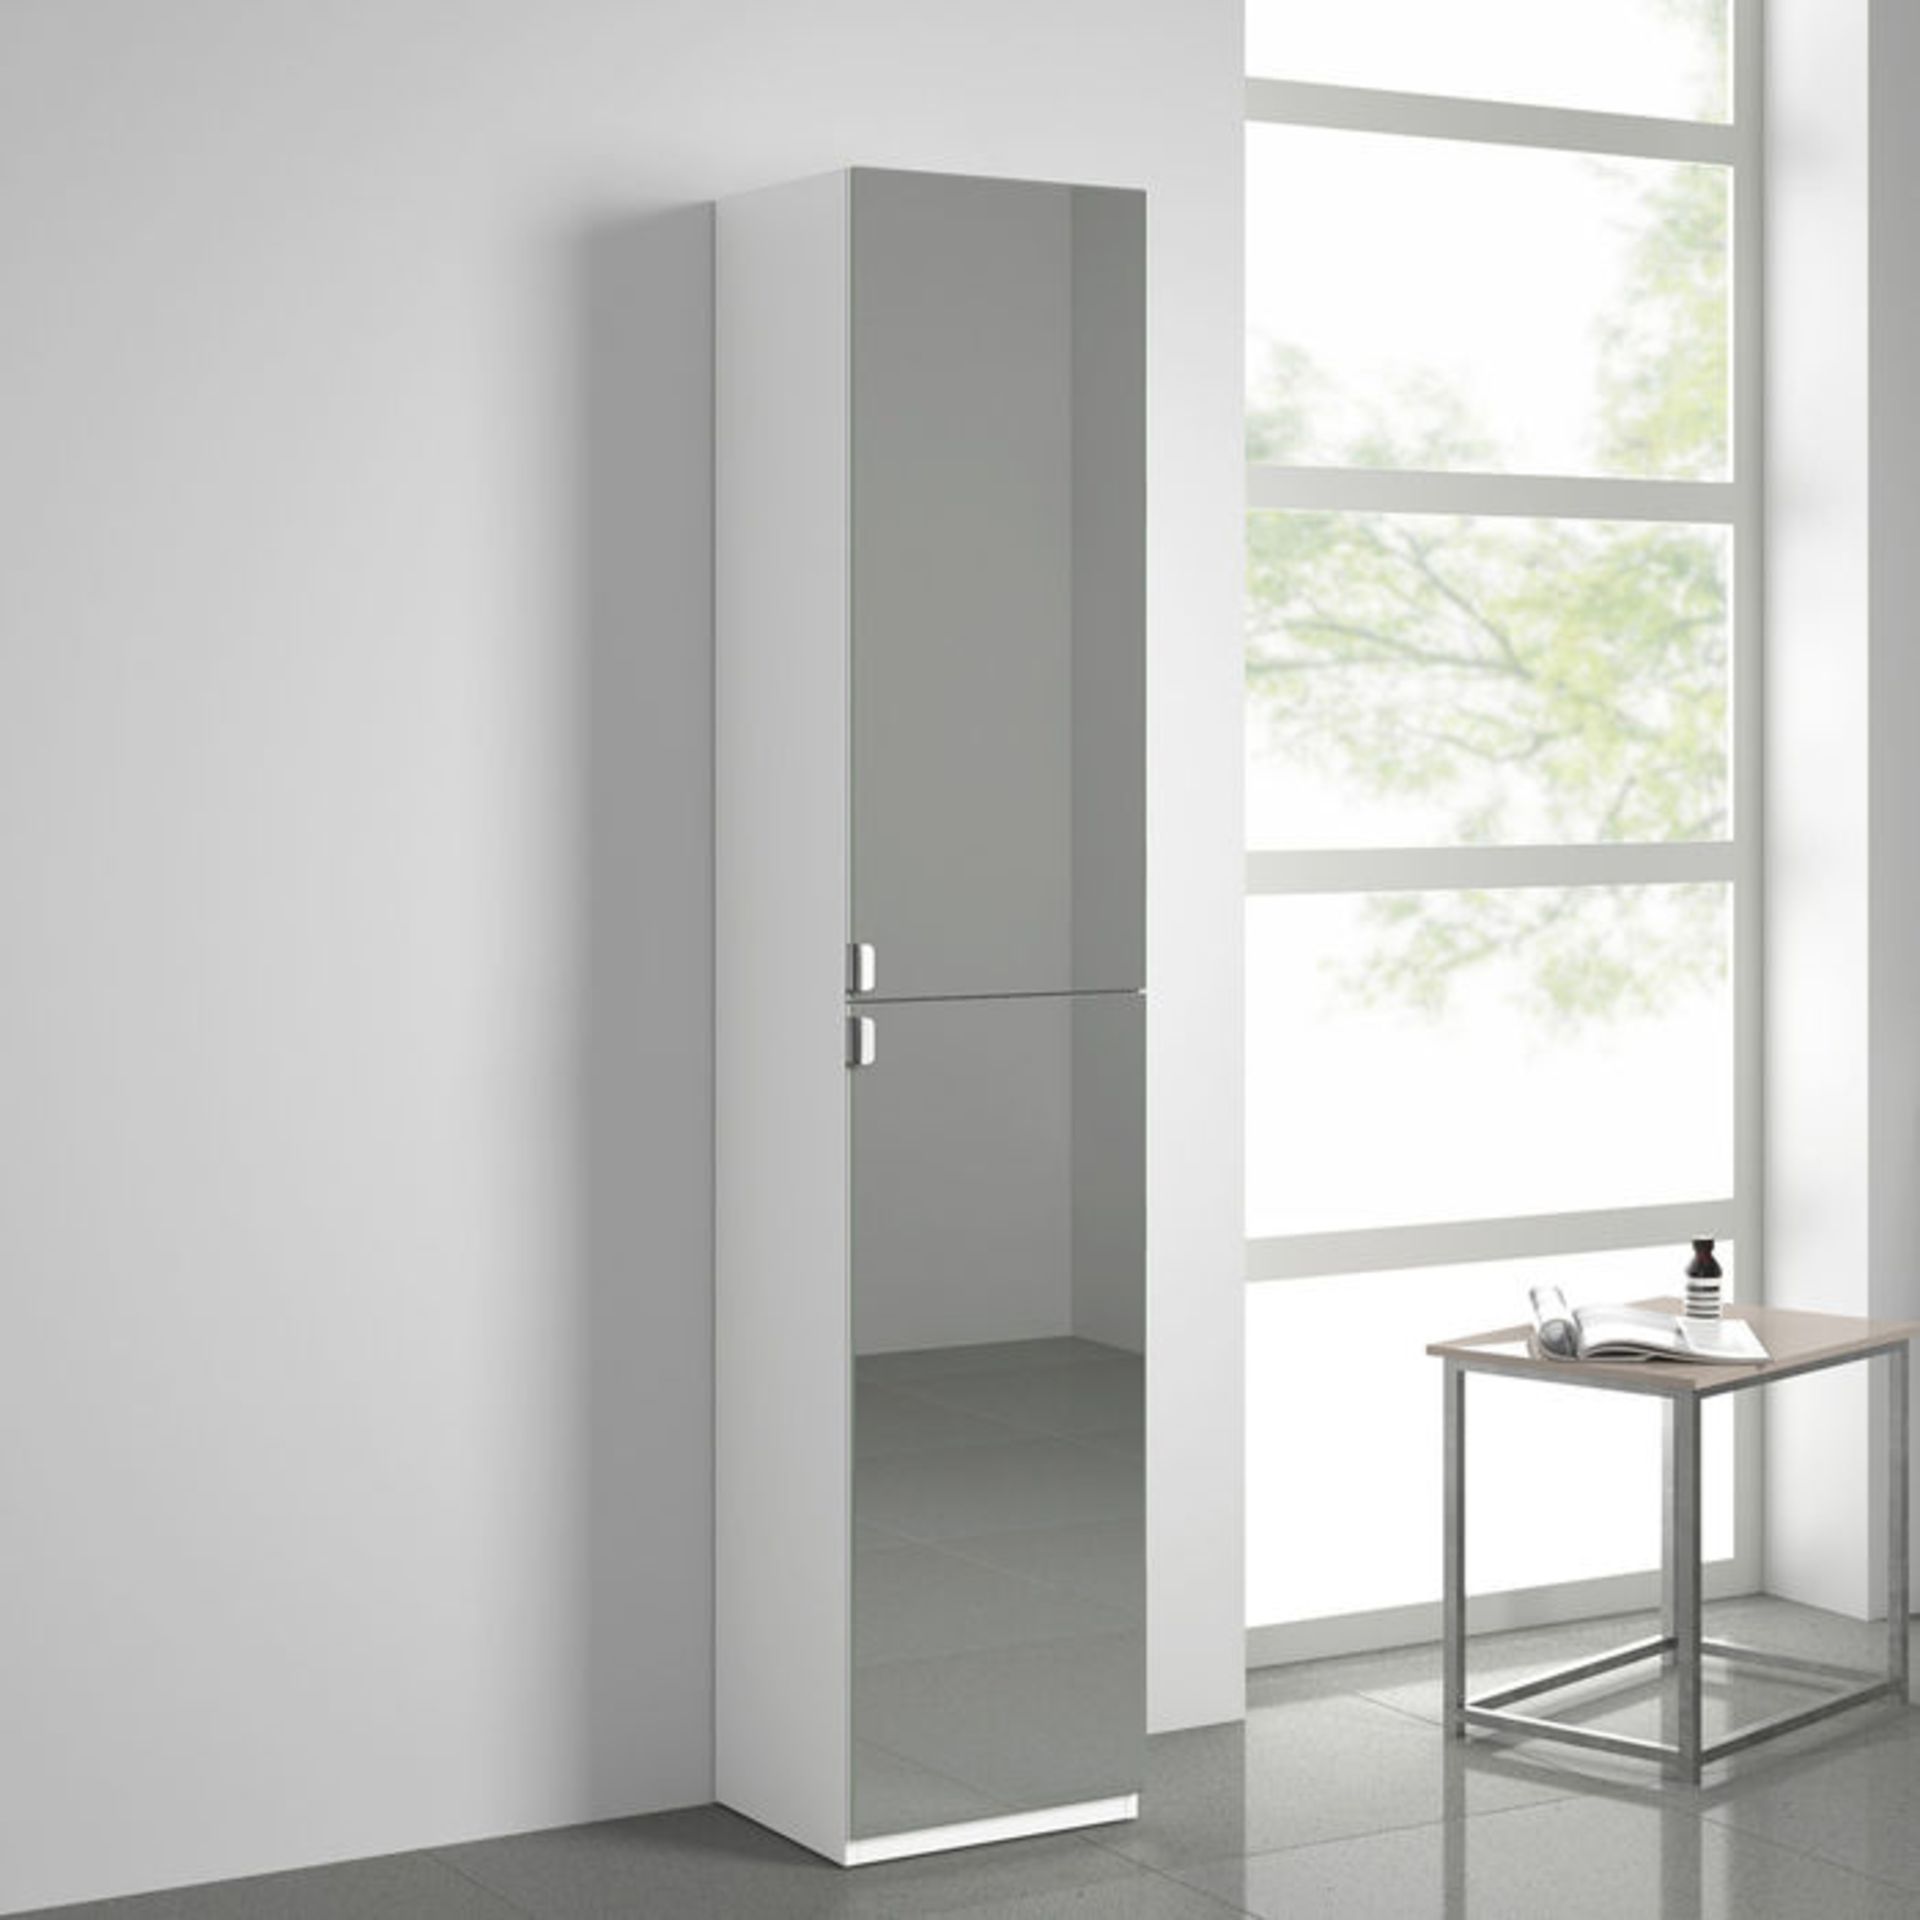 (Q33) 1700x350mm Mirrored Door Matte White Tall Storage Cabinet - Floor Standing. RRP £349.99. Enjoy - Image 2 of 4